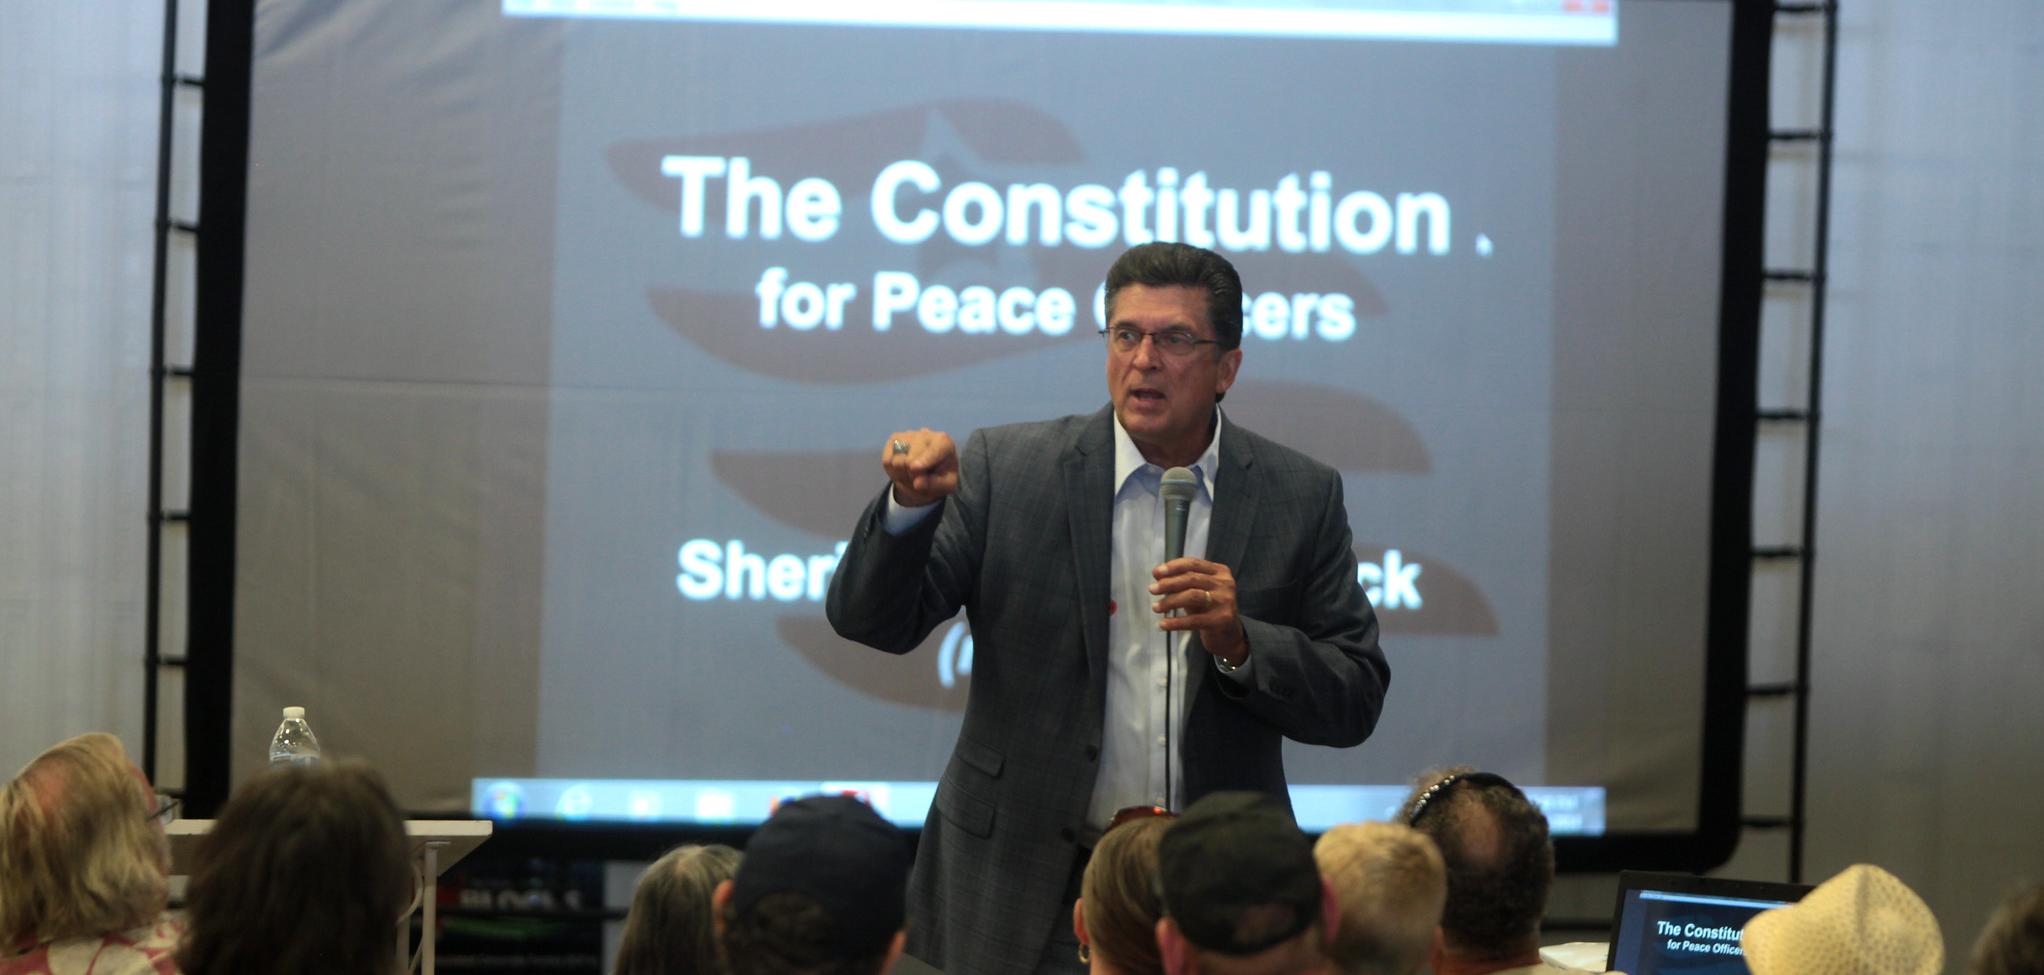 CSPOA founder former sheriff Richard Mack speaking at the 2014 PrepperFest Expo at WestWorld in Scottsdale, Arizona on October 26, 2014. (Credit: Gage Skidmore/Flickr)